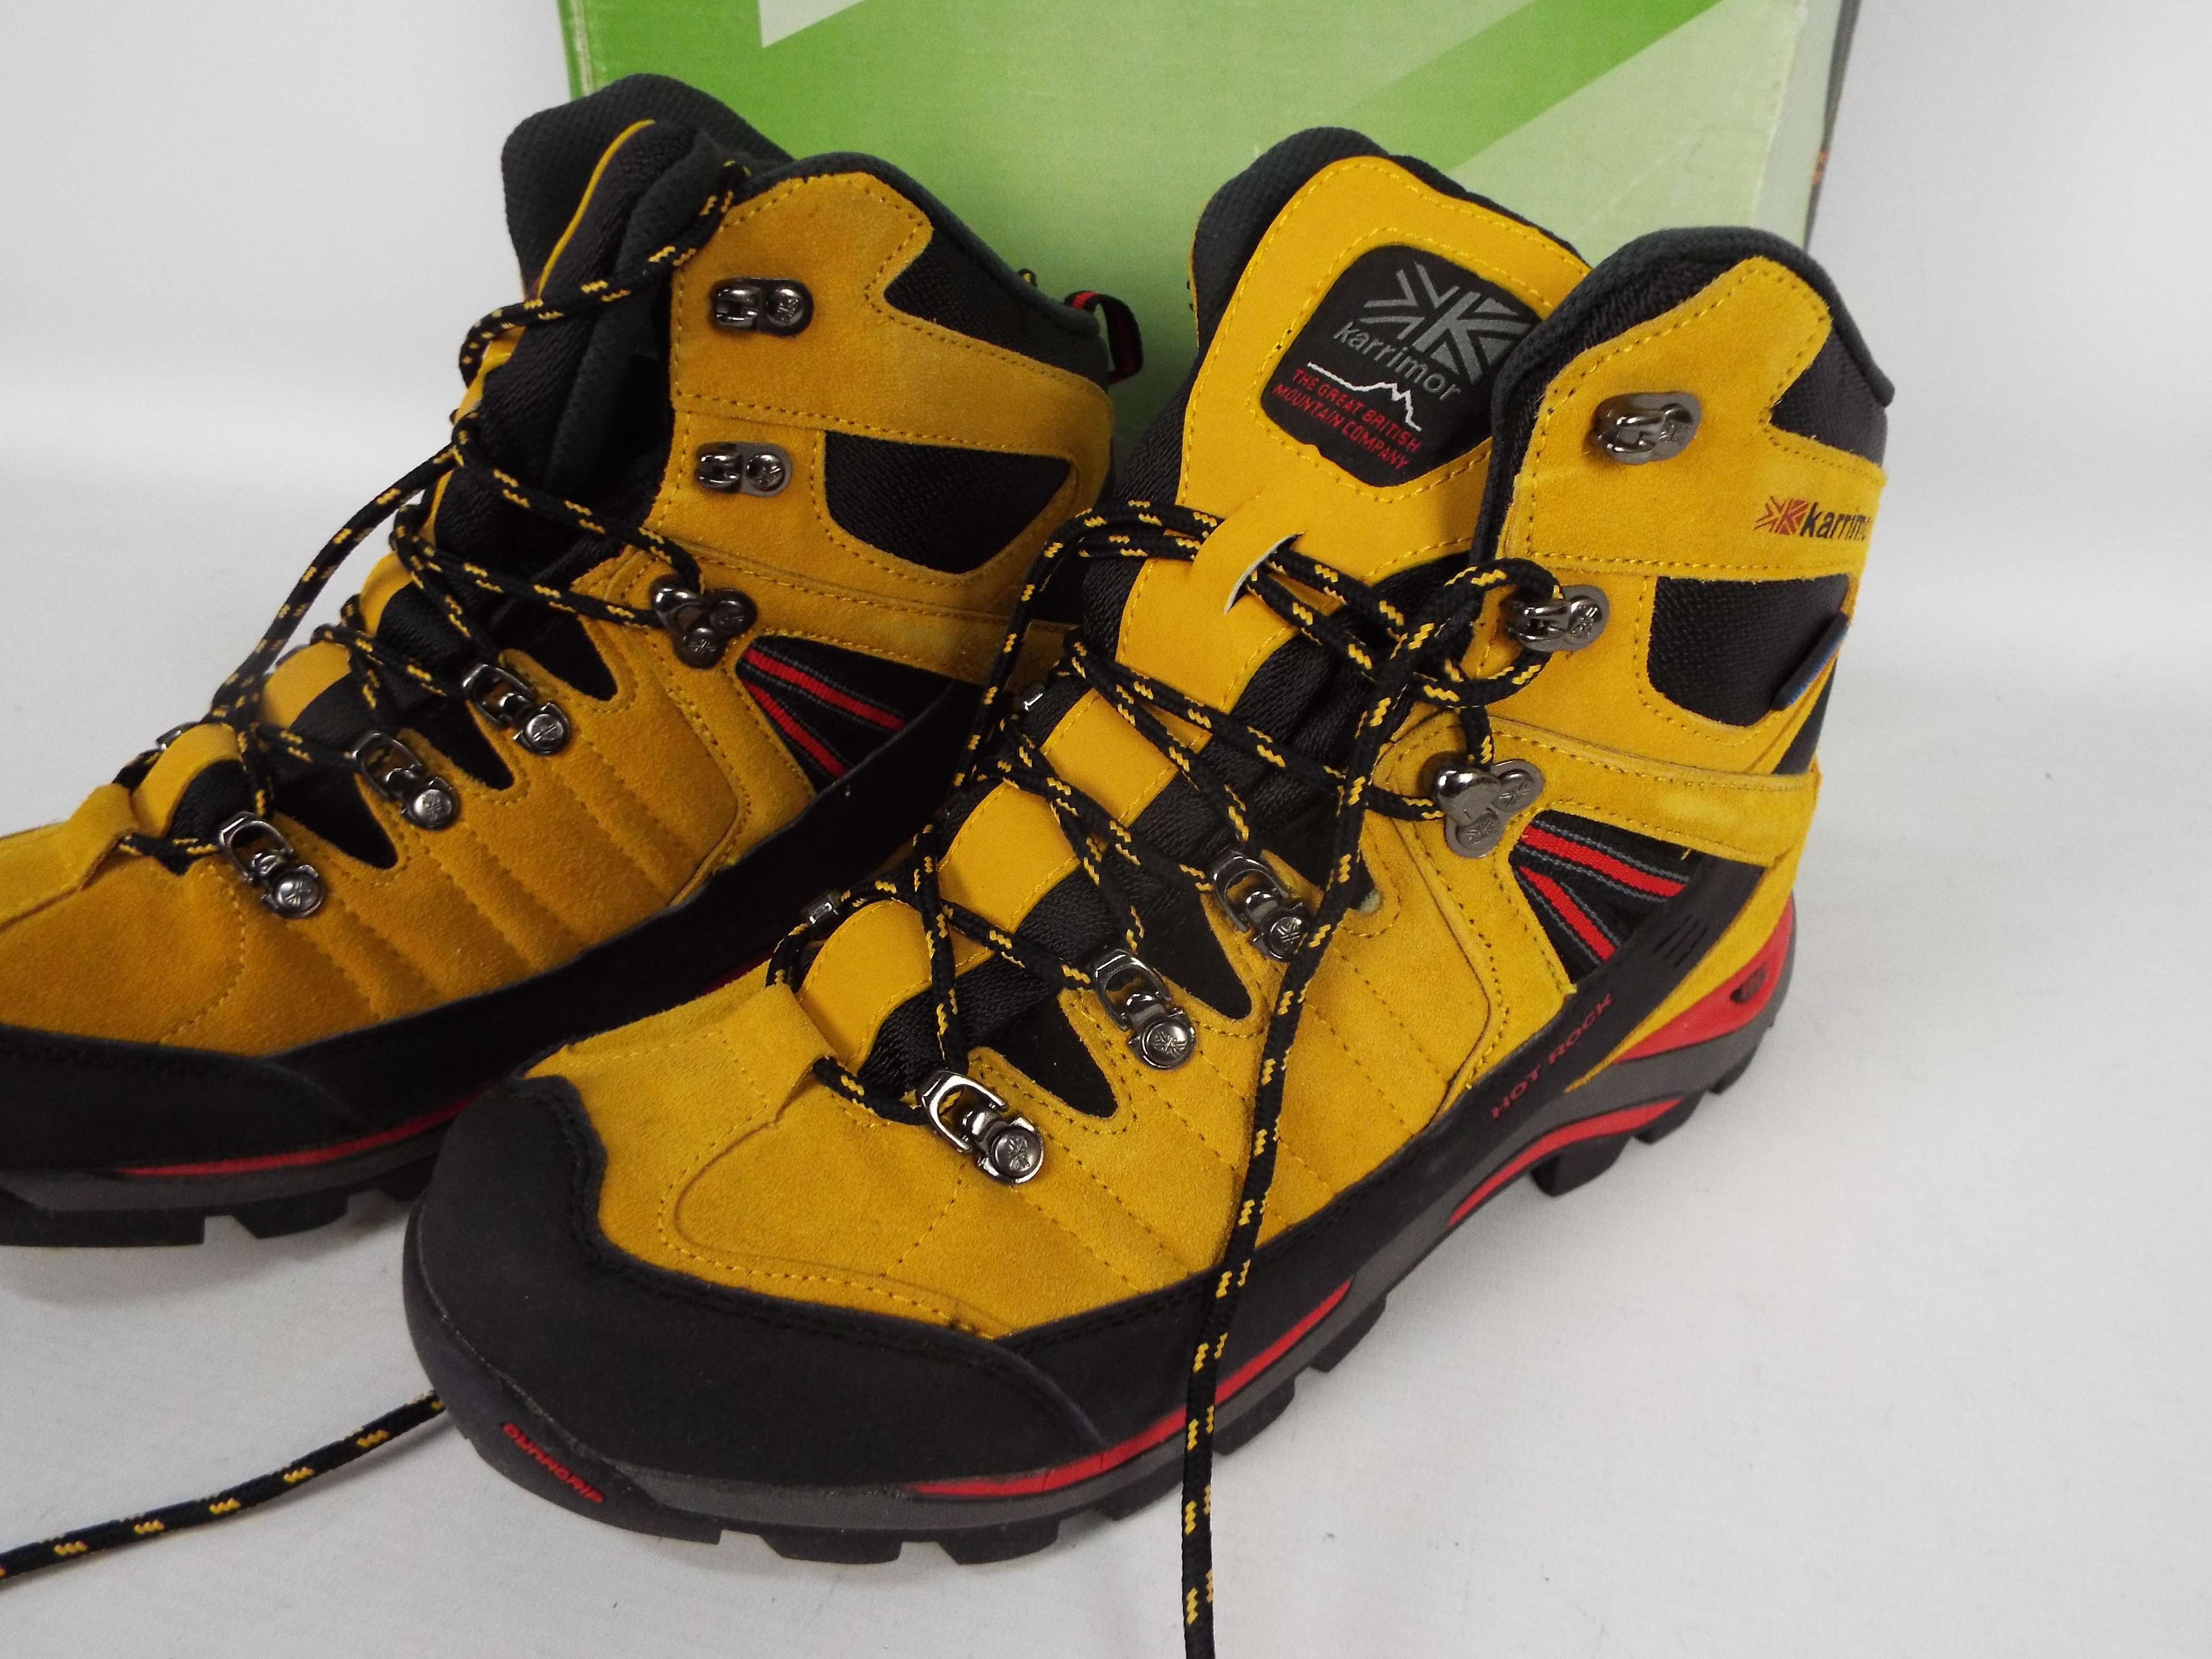 Karrimor Hot Rock Mid III weathertite XTR - a pair of yellowwalking boots, UK size 8. - Image 3 of 4